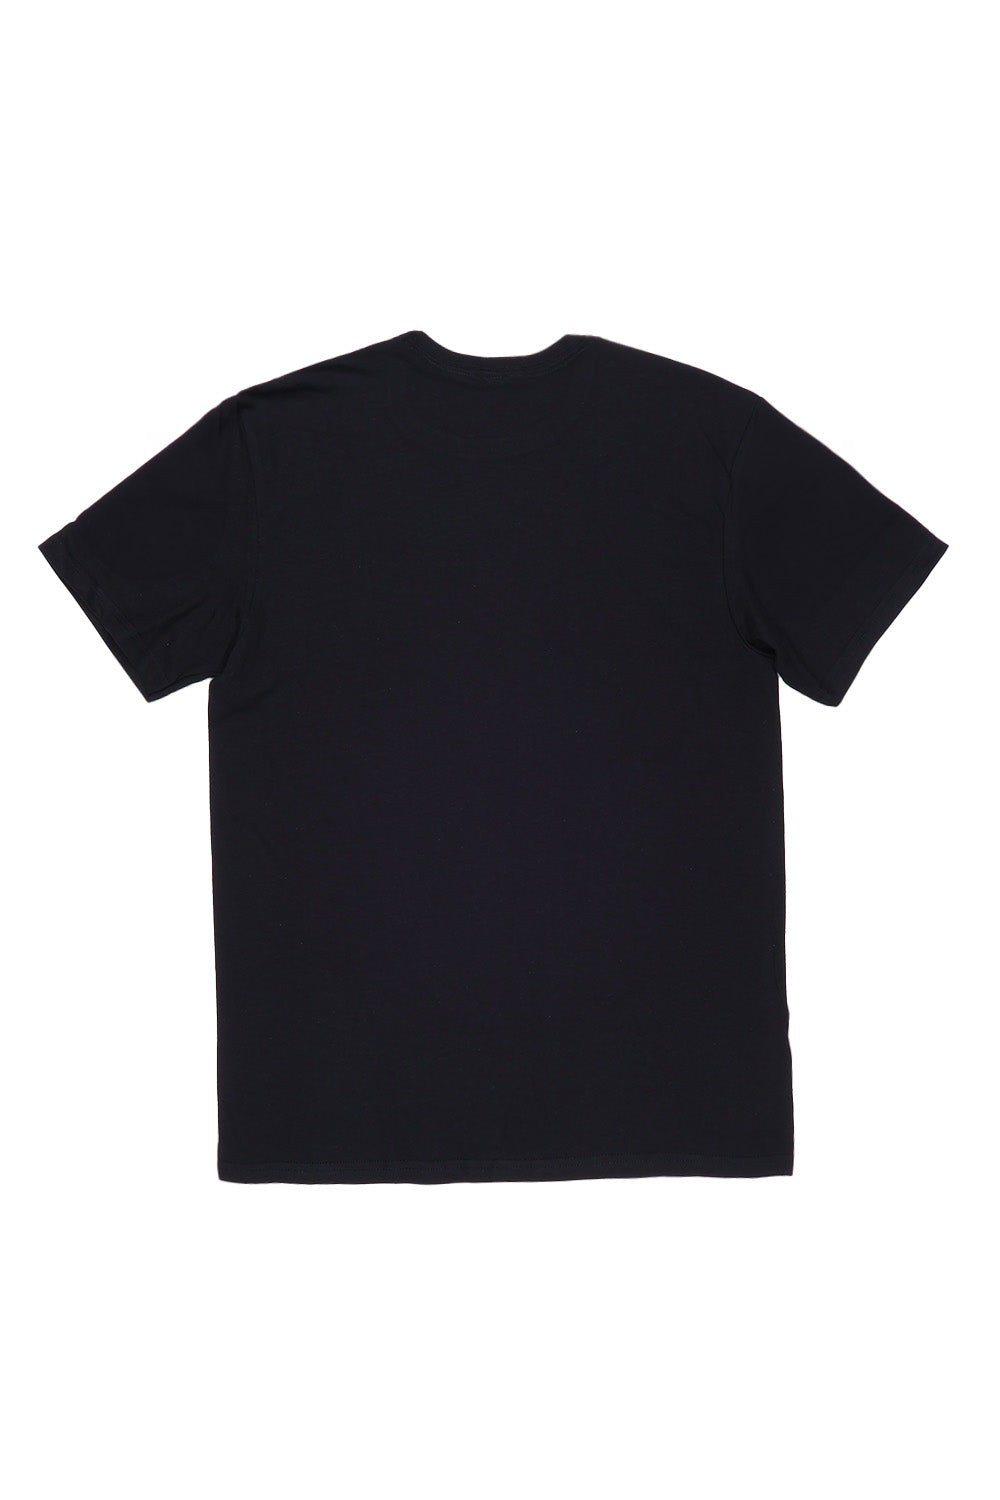 Palm Springs Teddy T-Shirt in Black (Custom Packs)